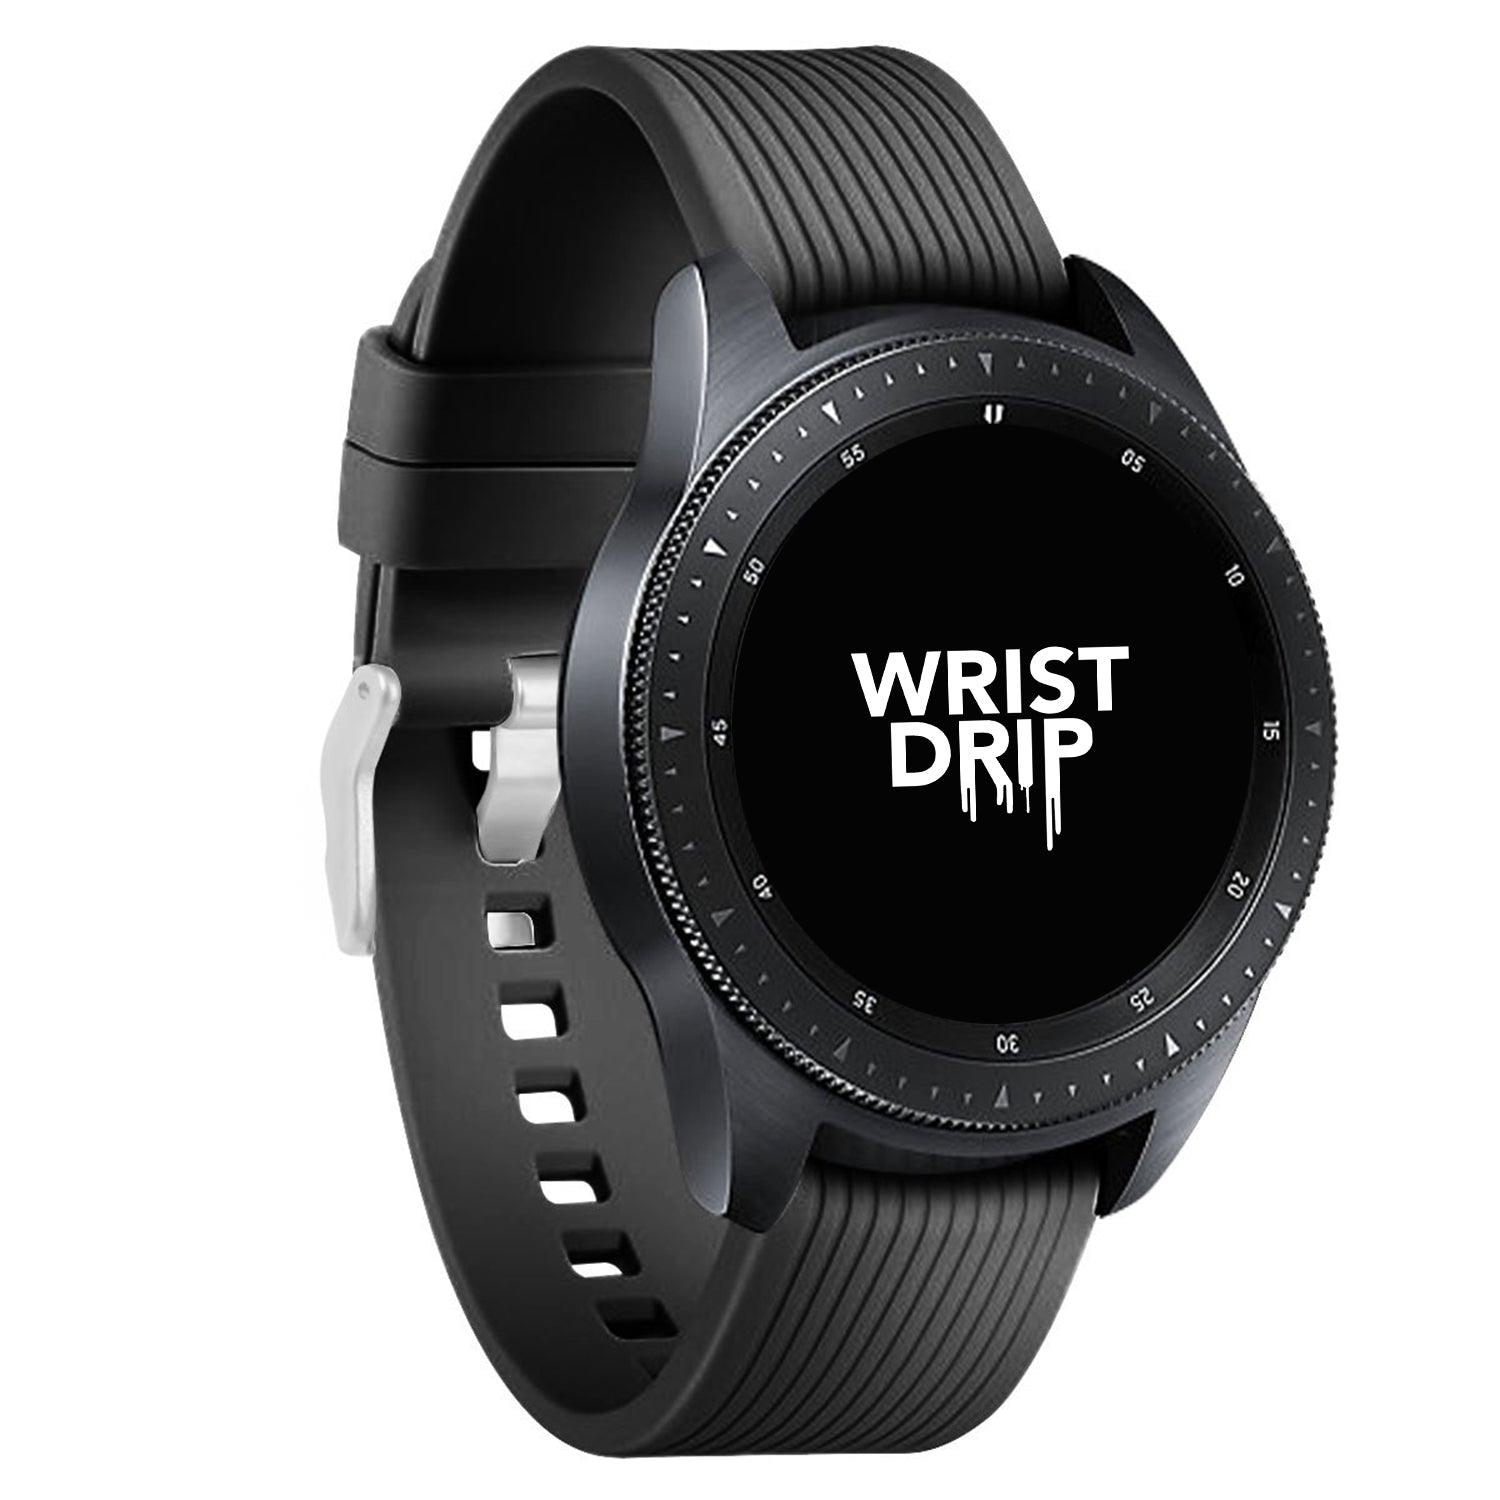 The April Samsung Galaxy Watch (5 Colours) - shopwristdrip